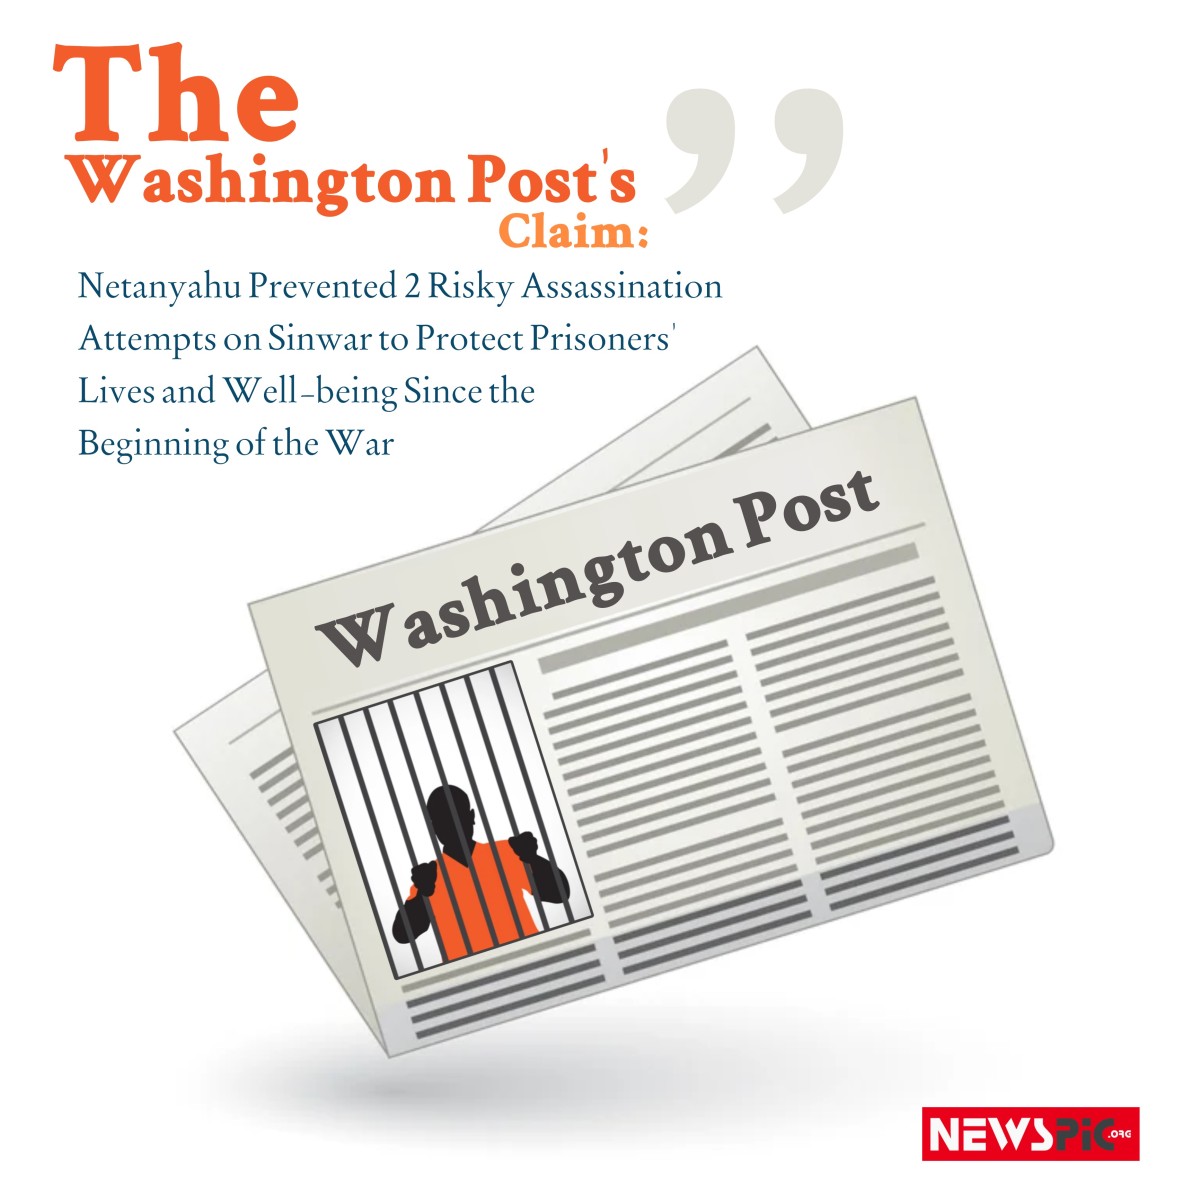 Washington Post's Claim